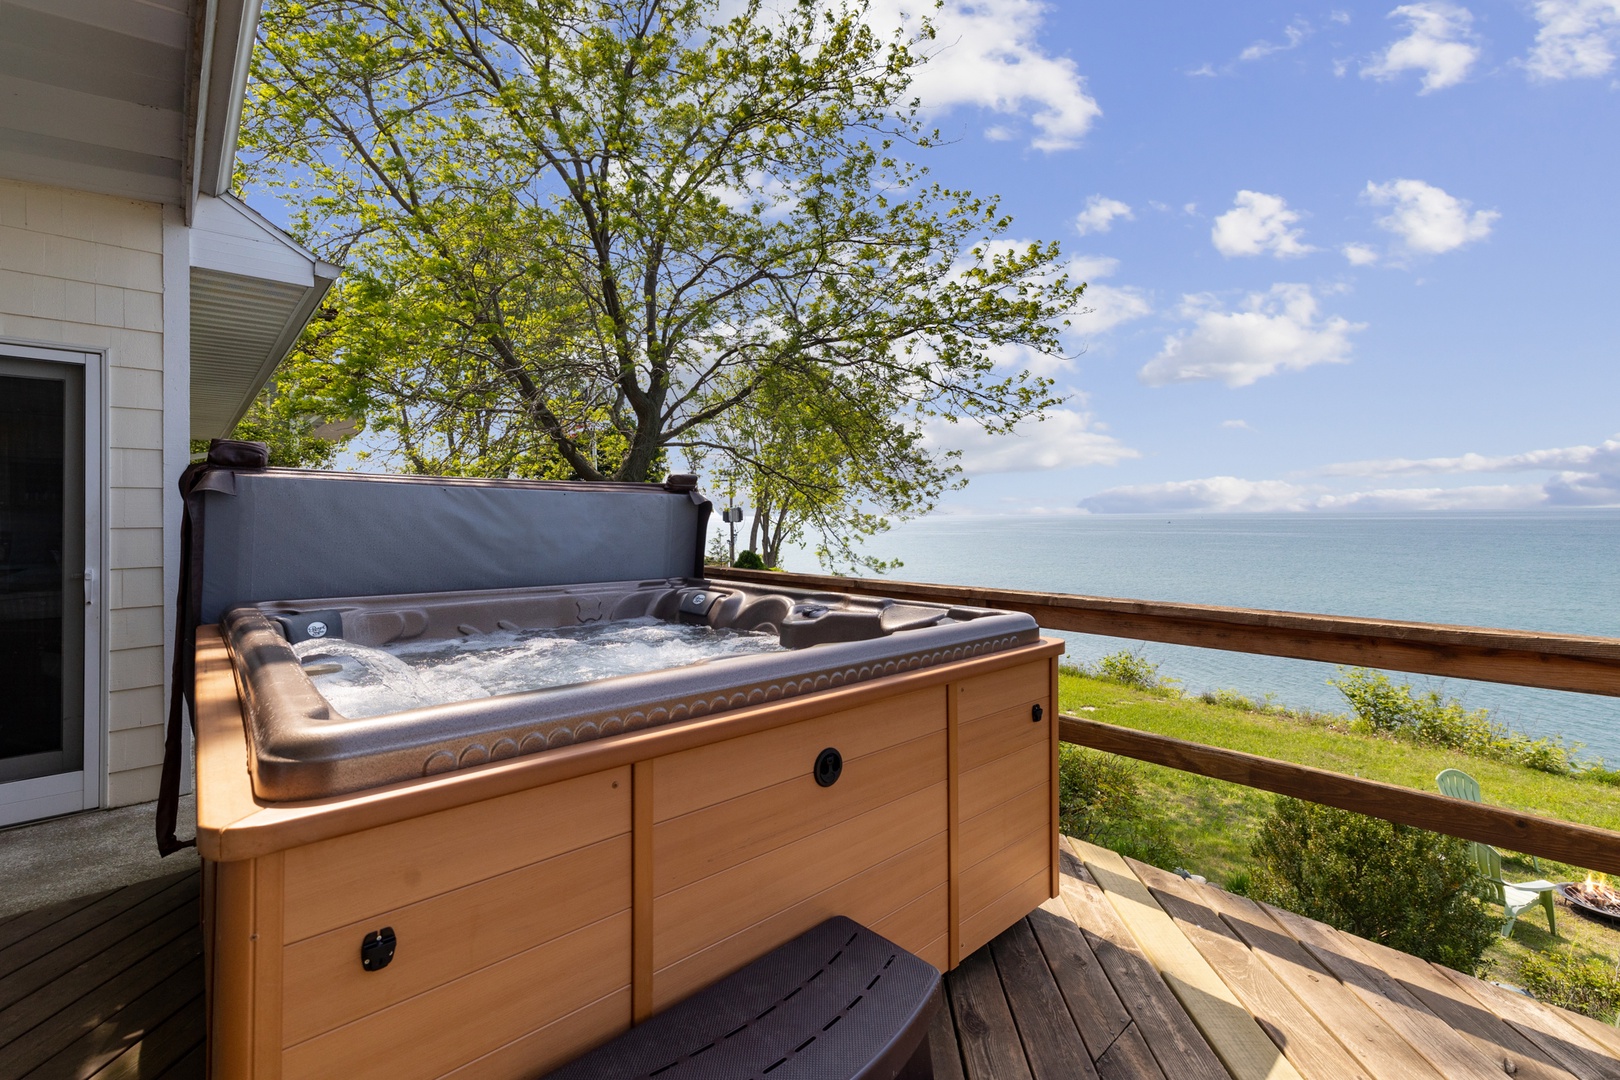 The hot tub and back deck boast breathtaking views of Lake Michigan.